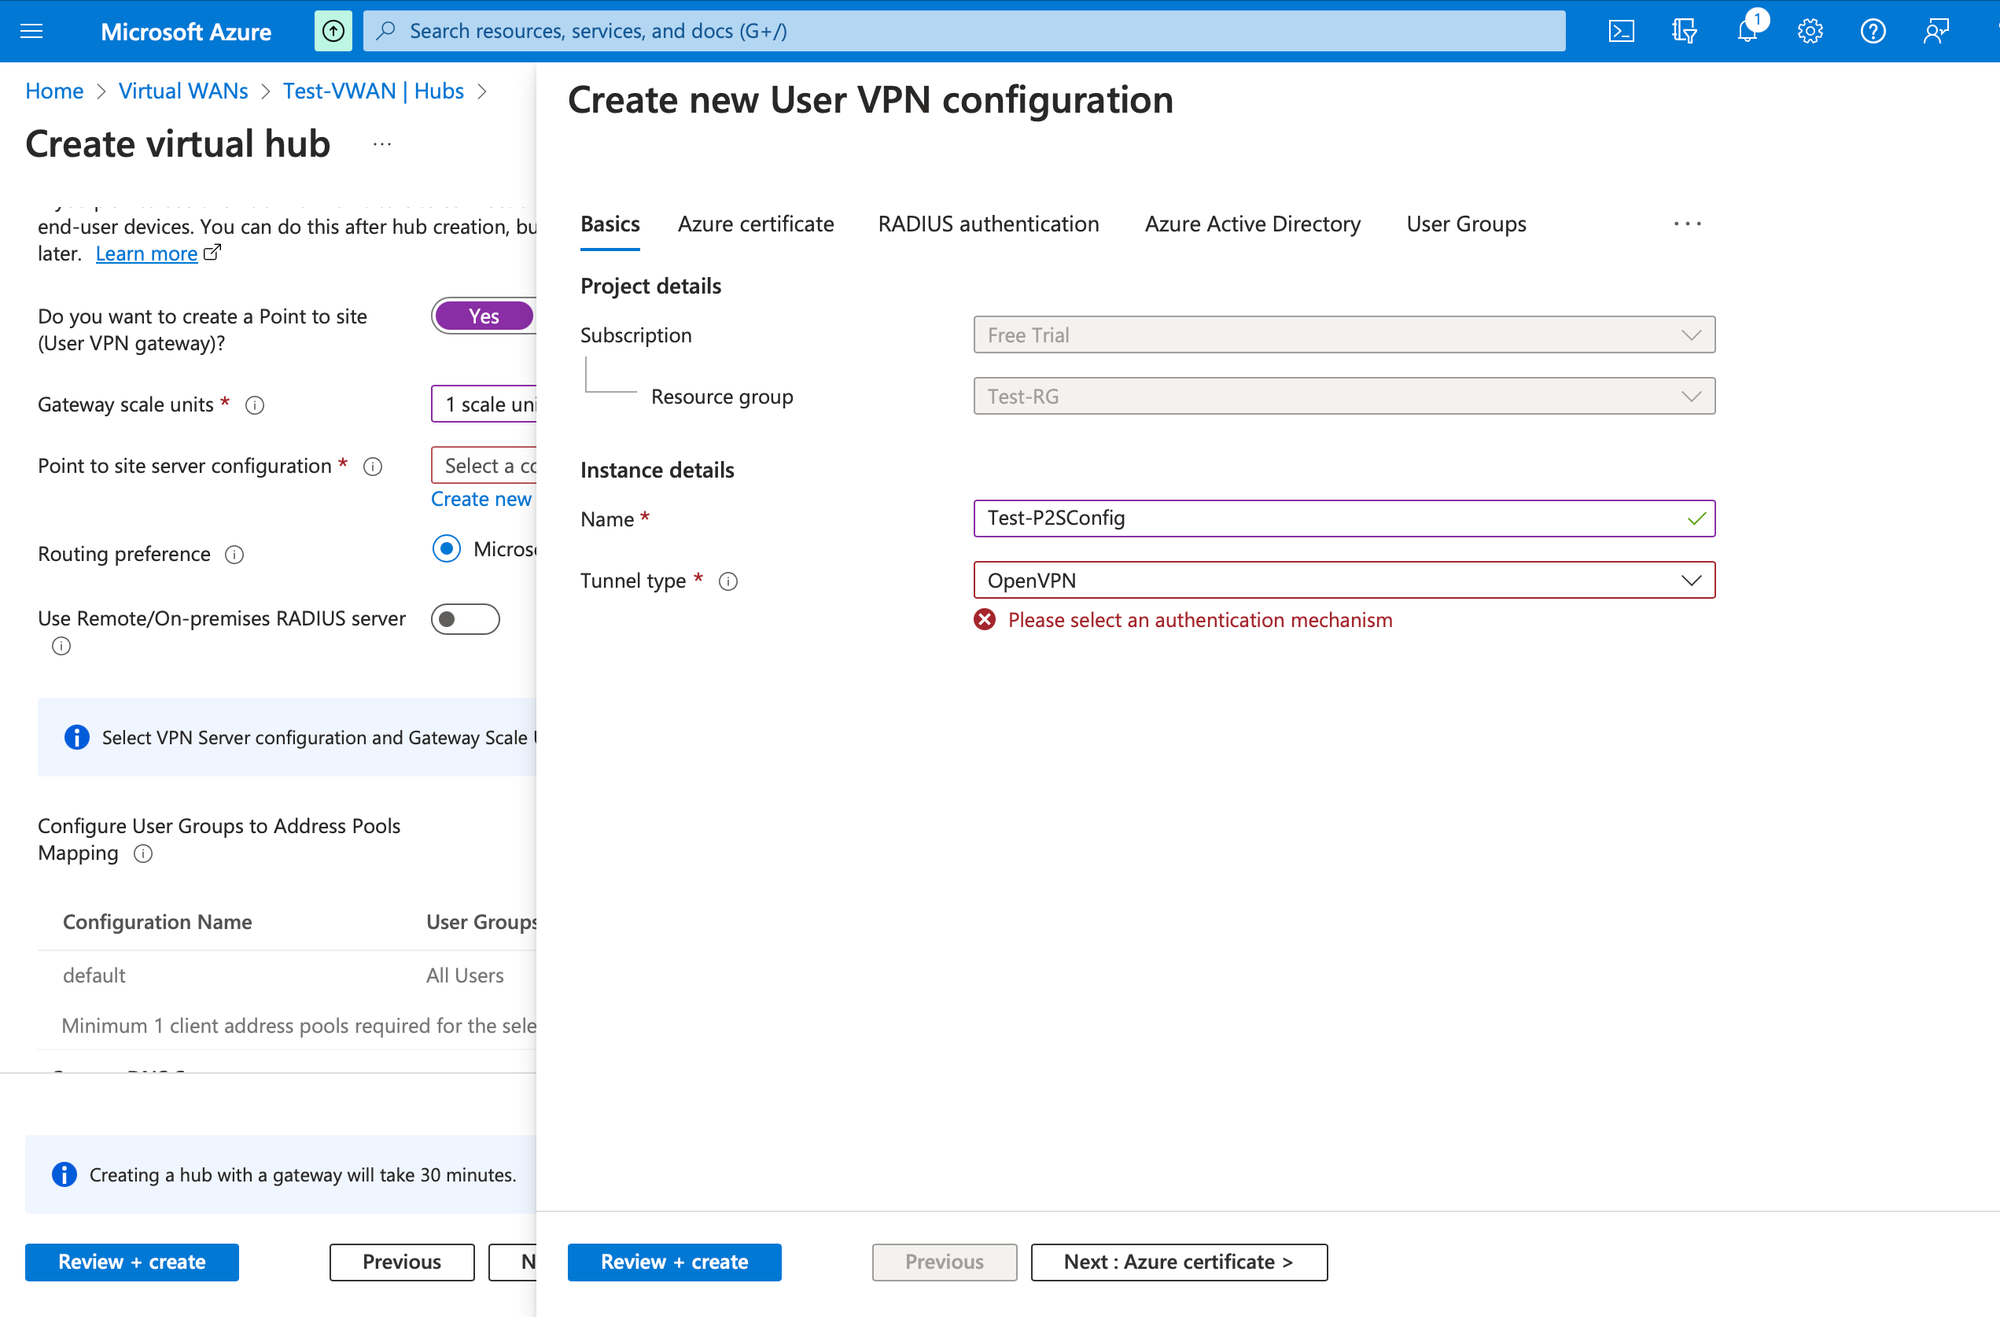 Setup Azure Virtual WAN - P2S OpenVPN with AD Integration